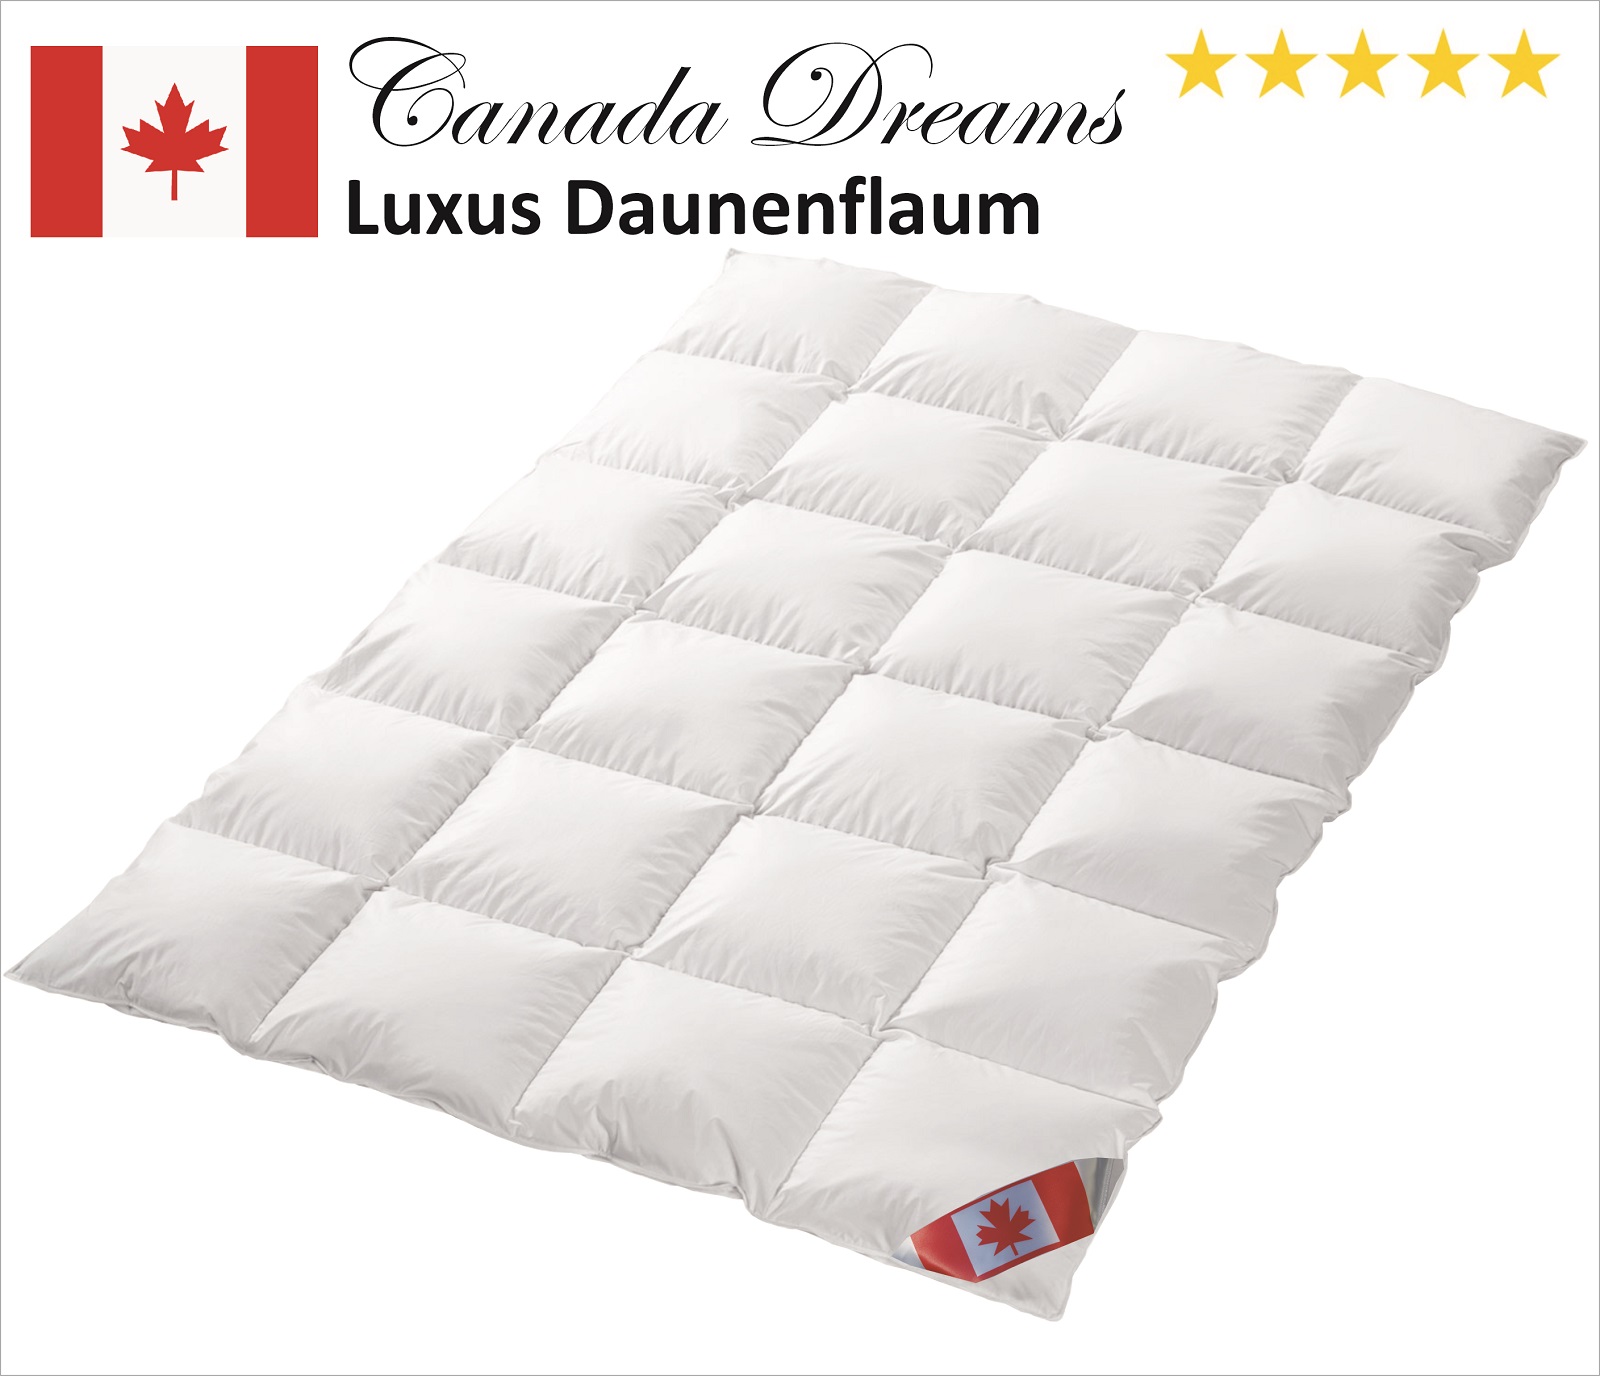 Canada Dreams Luxus Übergangs Daunendecke Daunenflaum CD 2 200x220